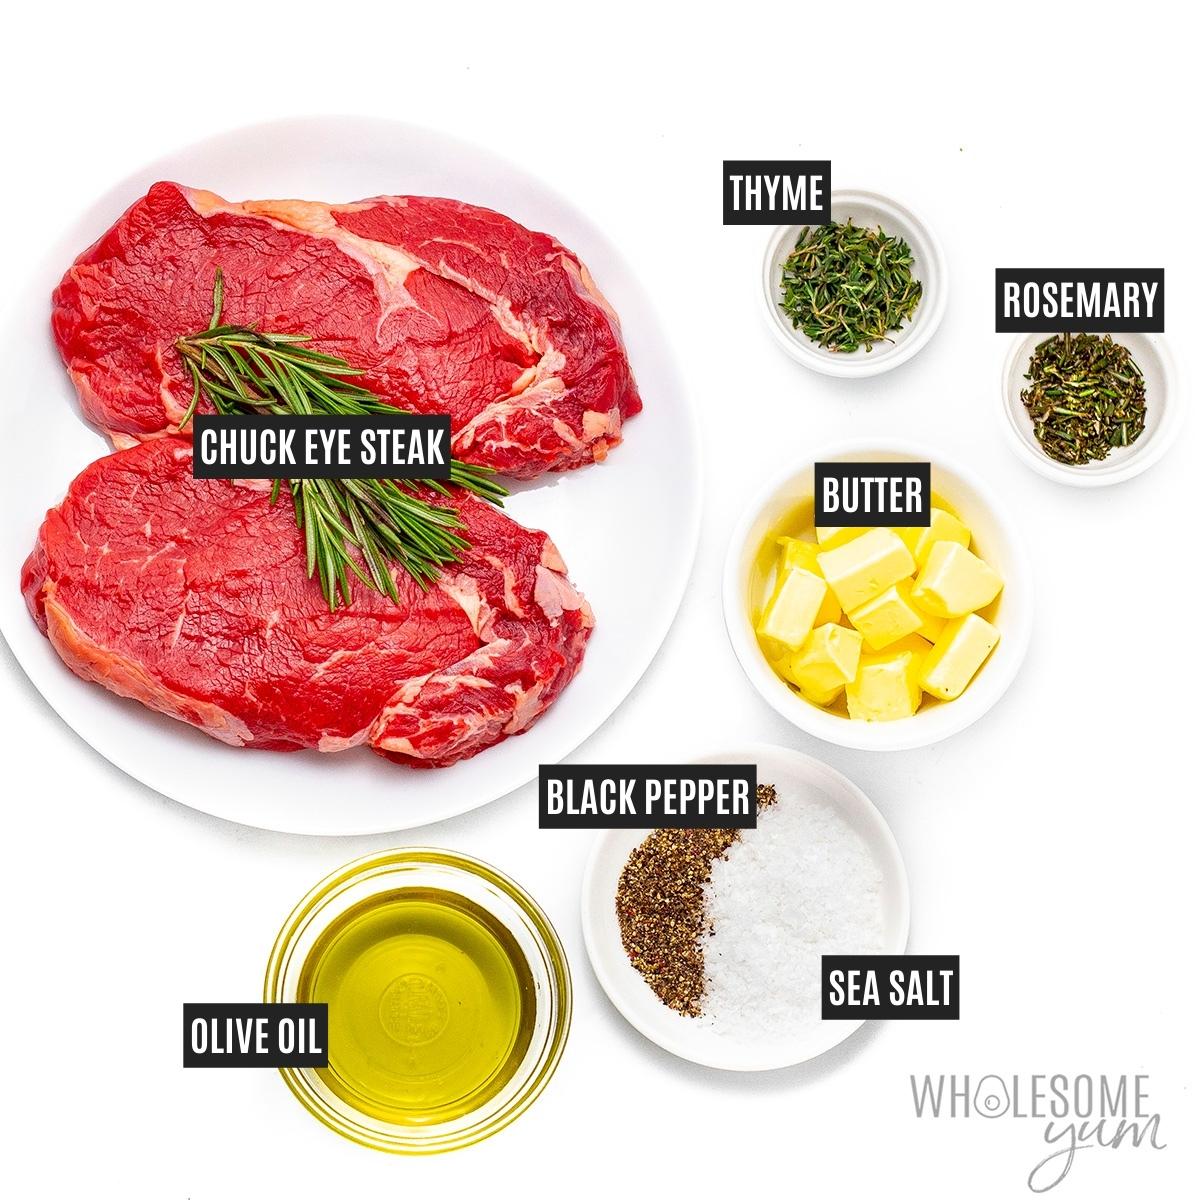 Chuck eye steak recipe ingredients in bowls.